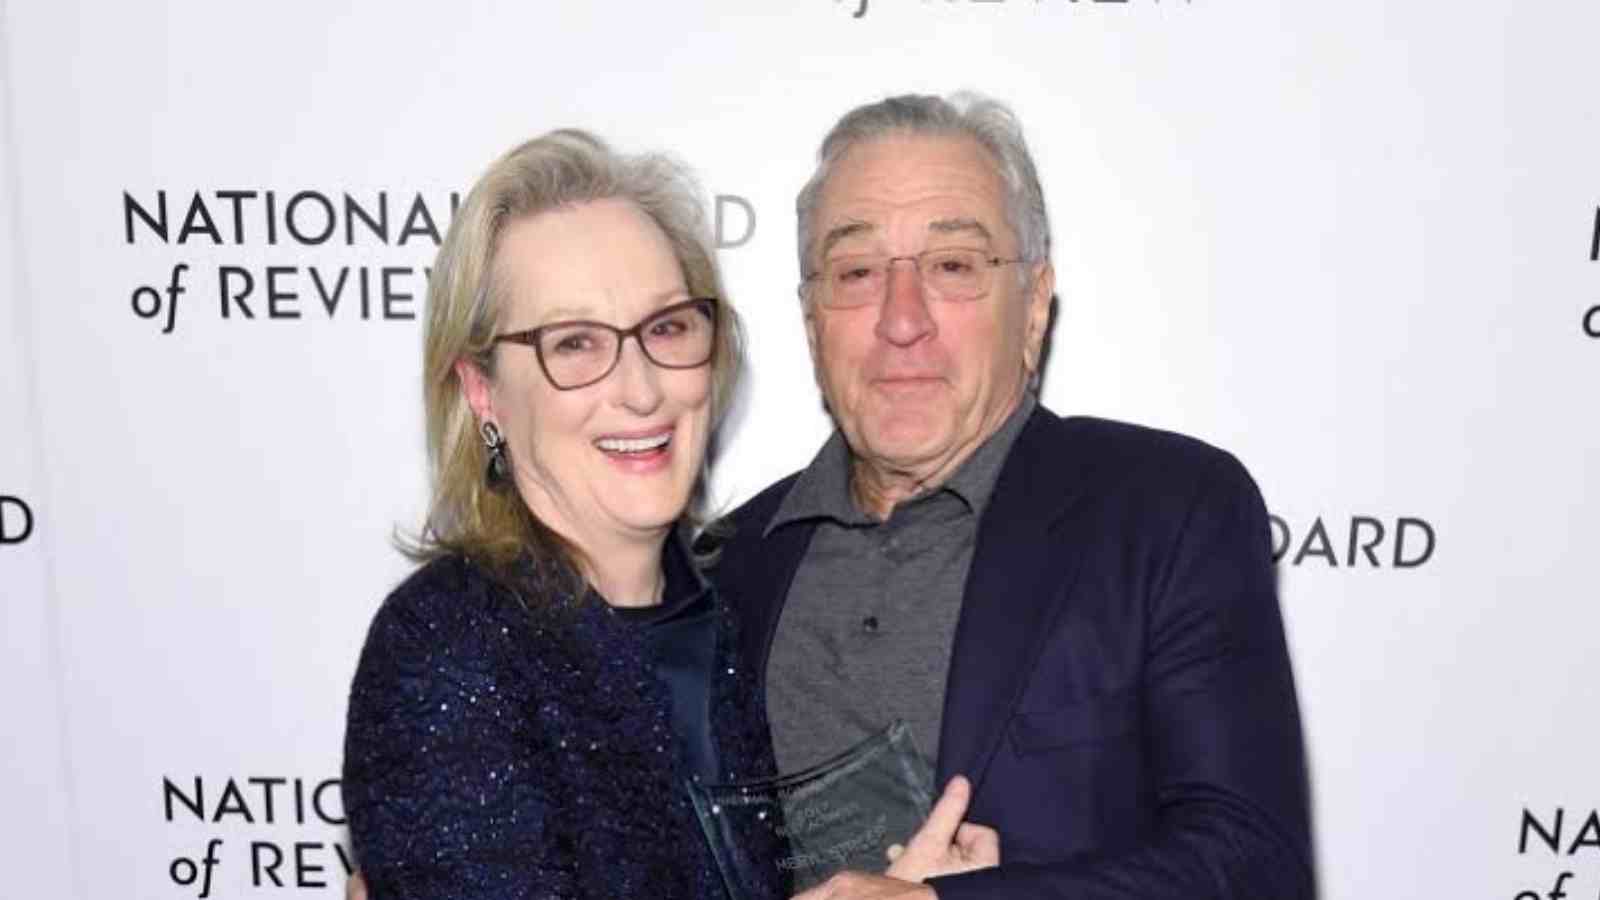 Robert De Niro and Meryl Streep